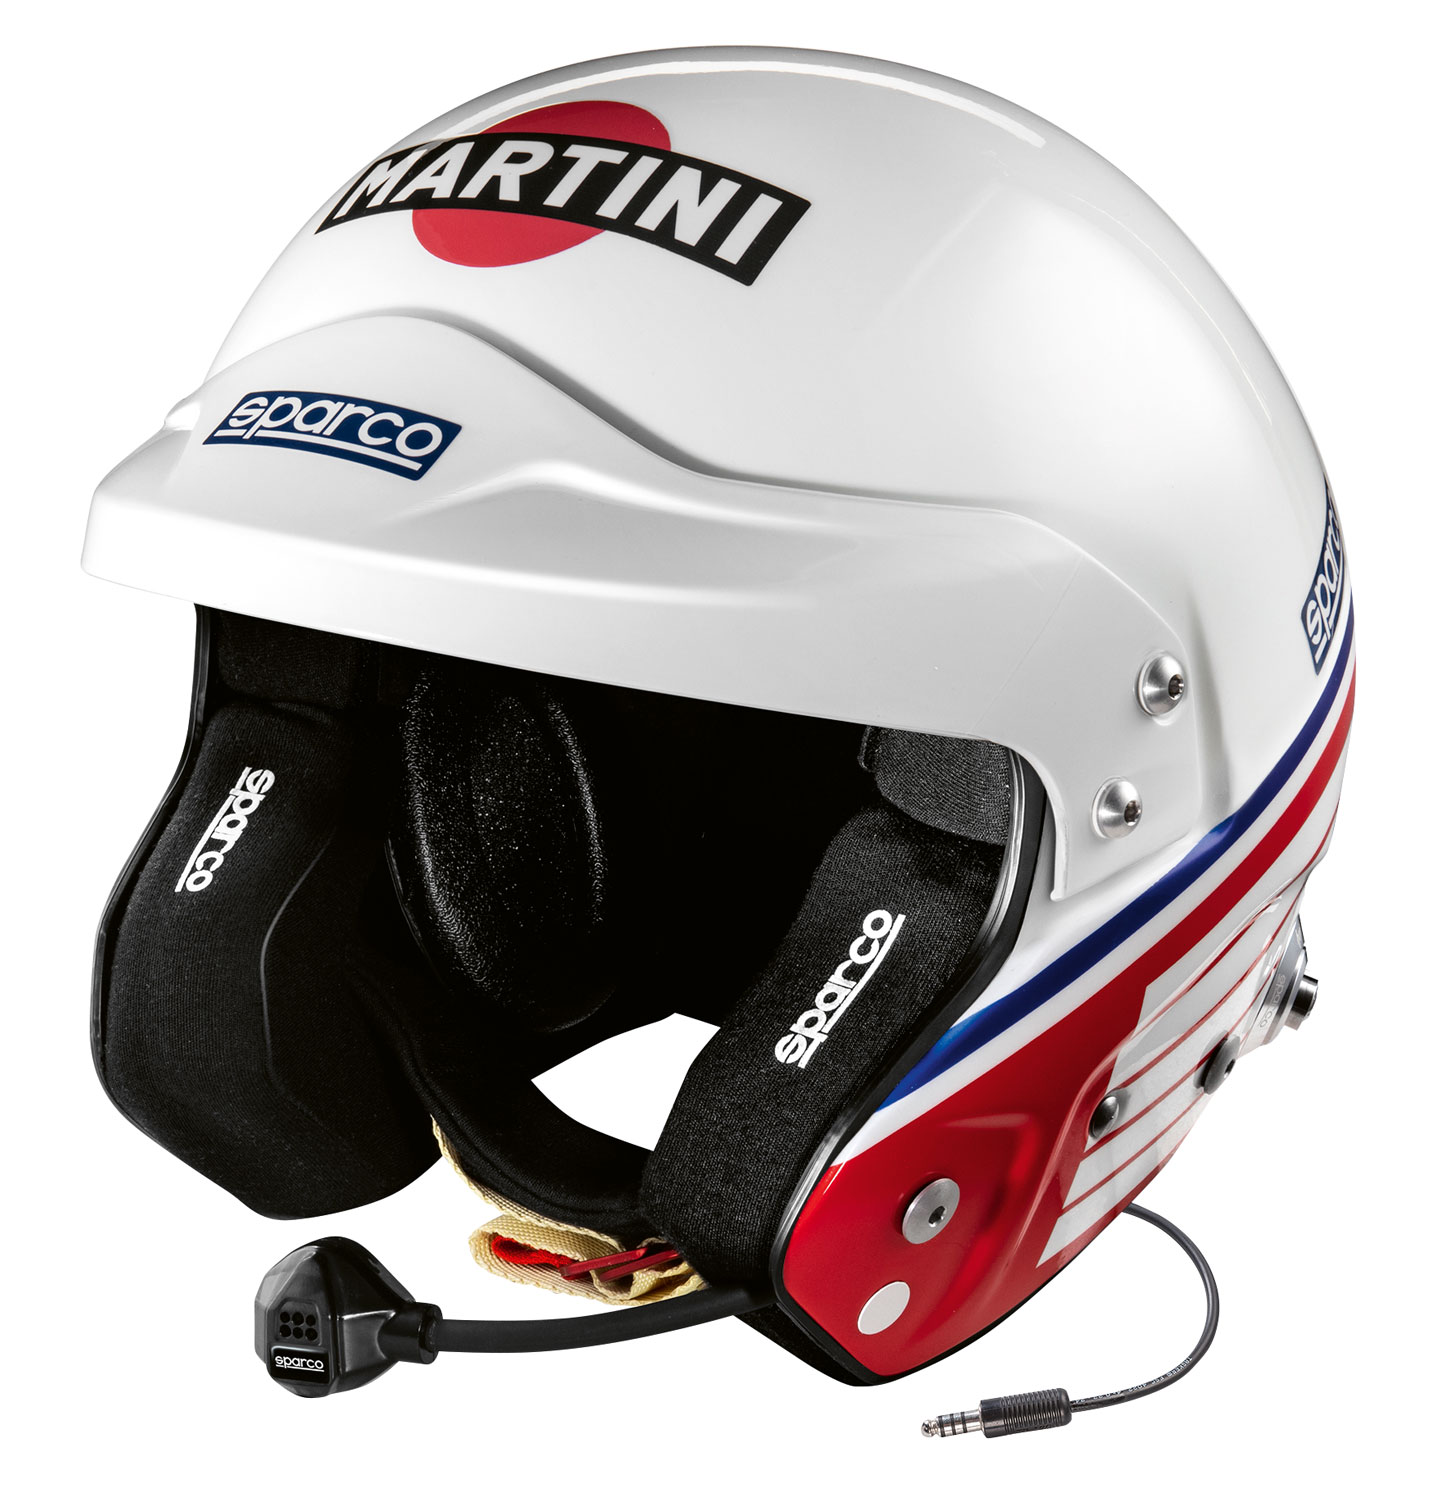 Sparco Helm Martini Racing (Logo-Design)